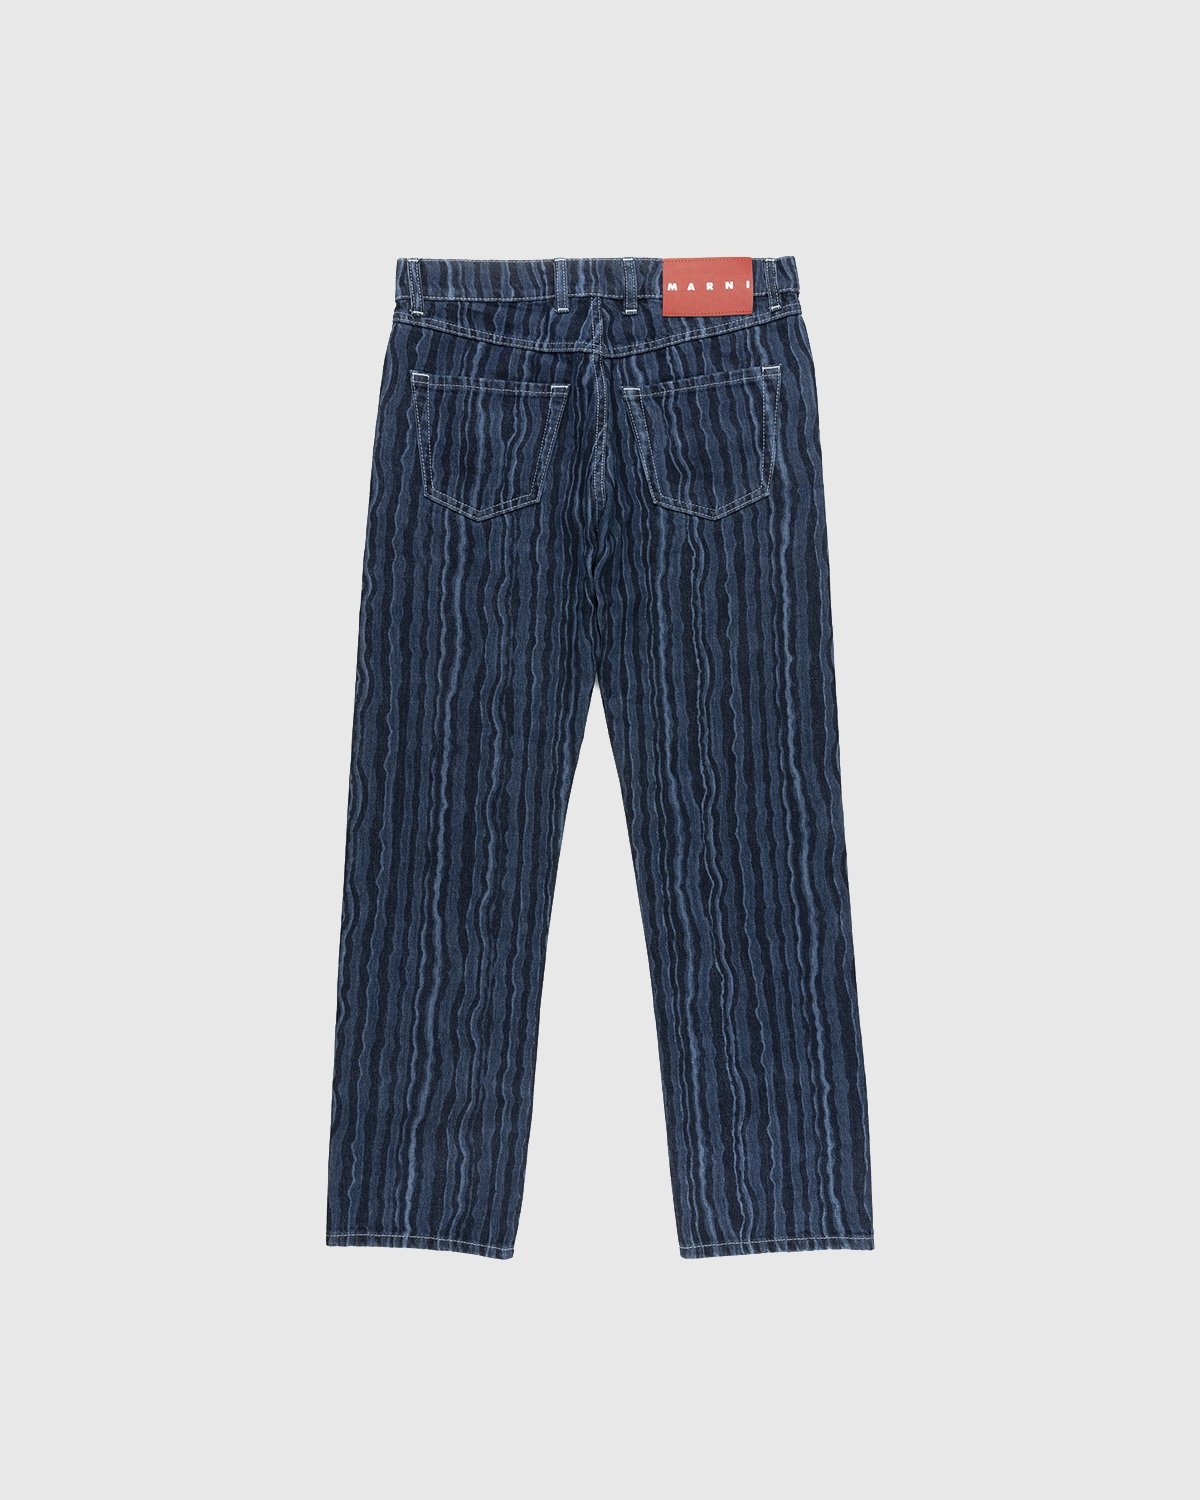 Marni – Abstract Print Wide Leg Jeans Blue - Denim - Blue - Image 2